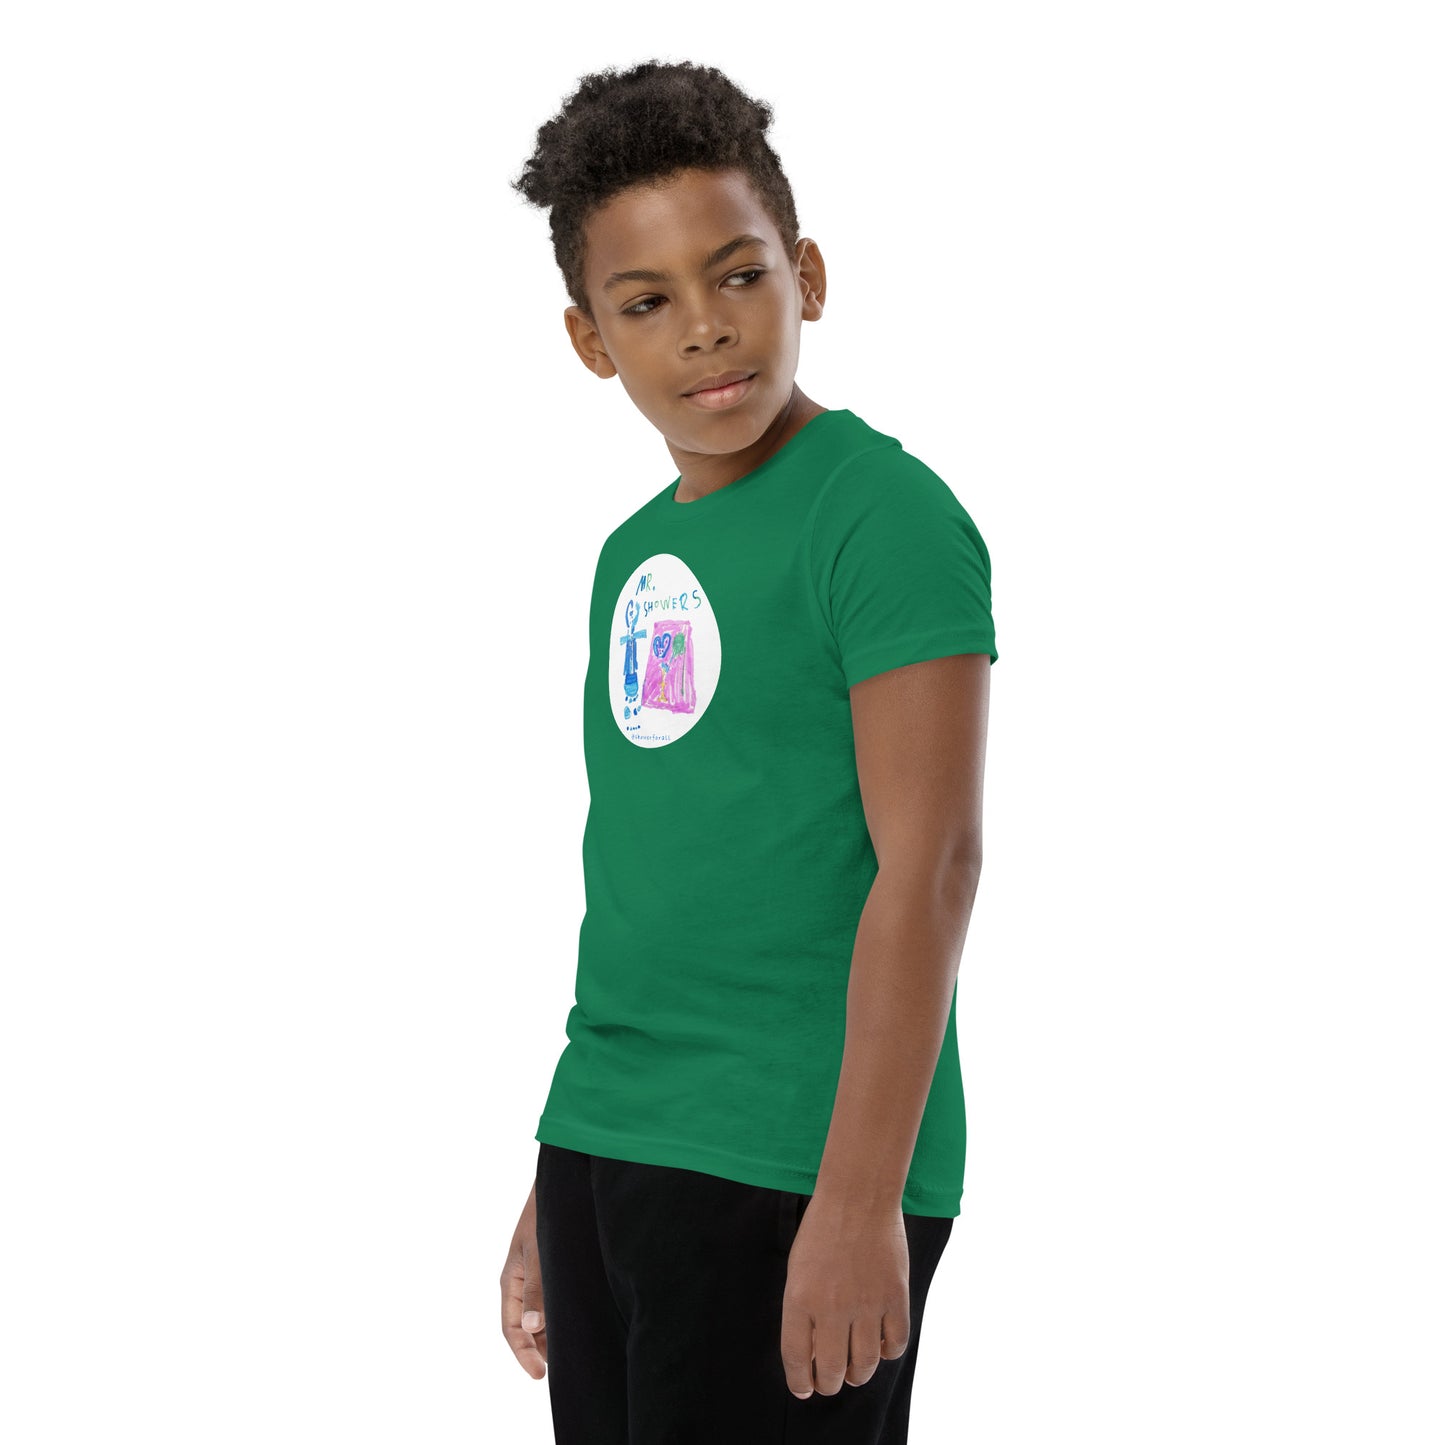 Youth Mr. Showers T-Shirt - Kids Create